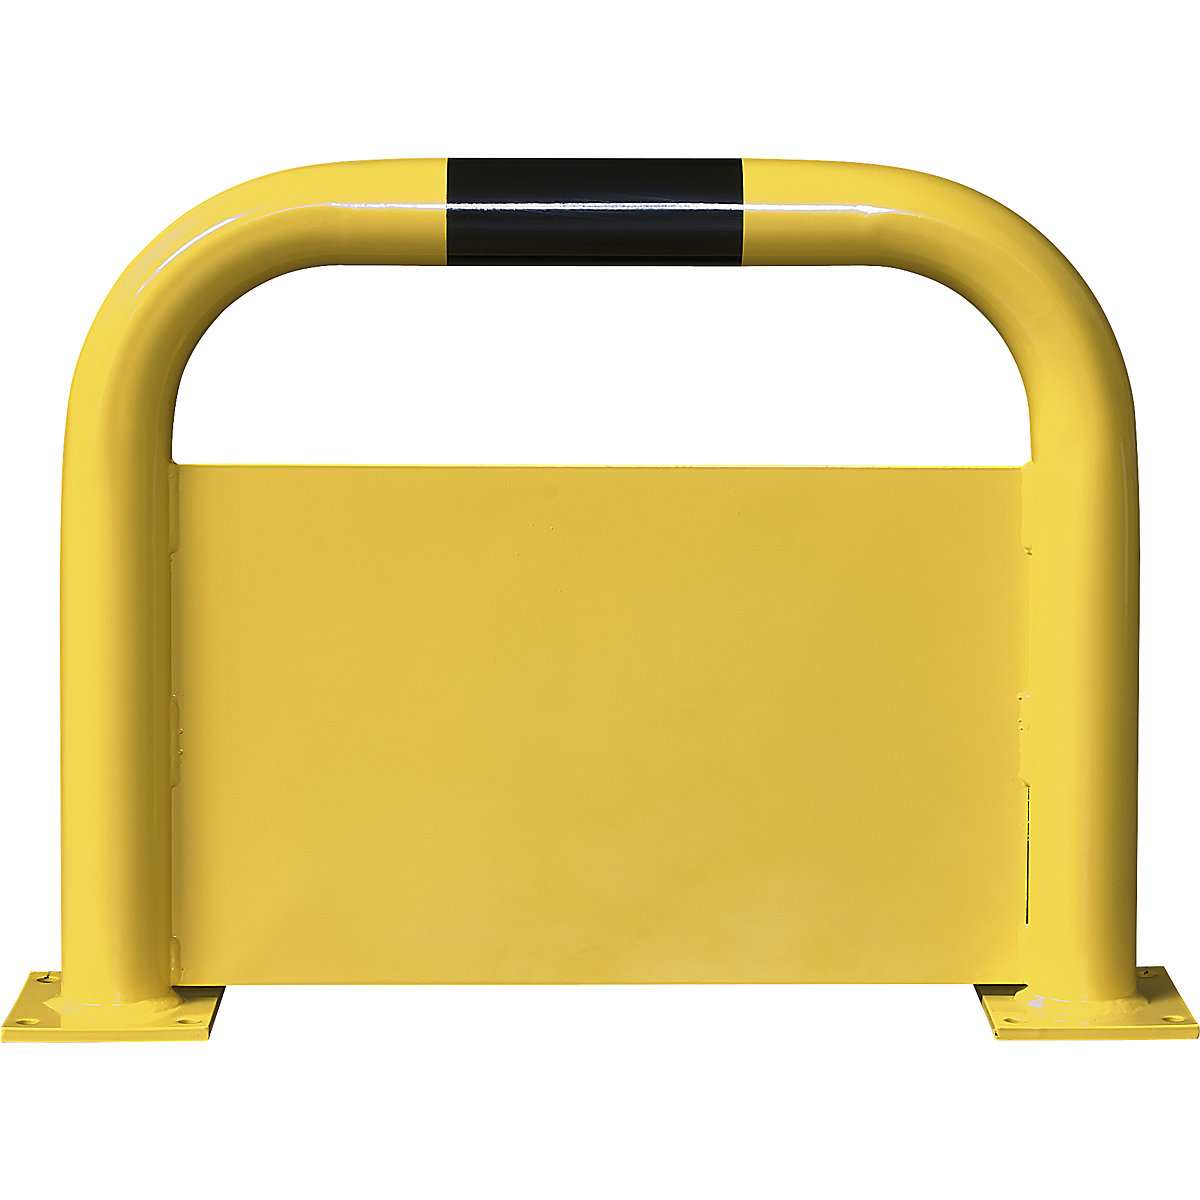 Crash protection bar, forklift guard 400 mm, HxW 600 x 750 mm